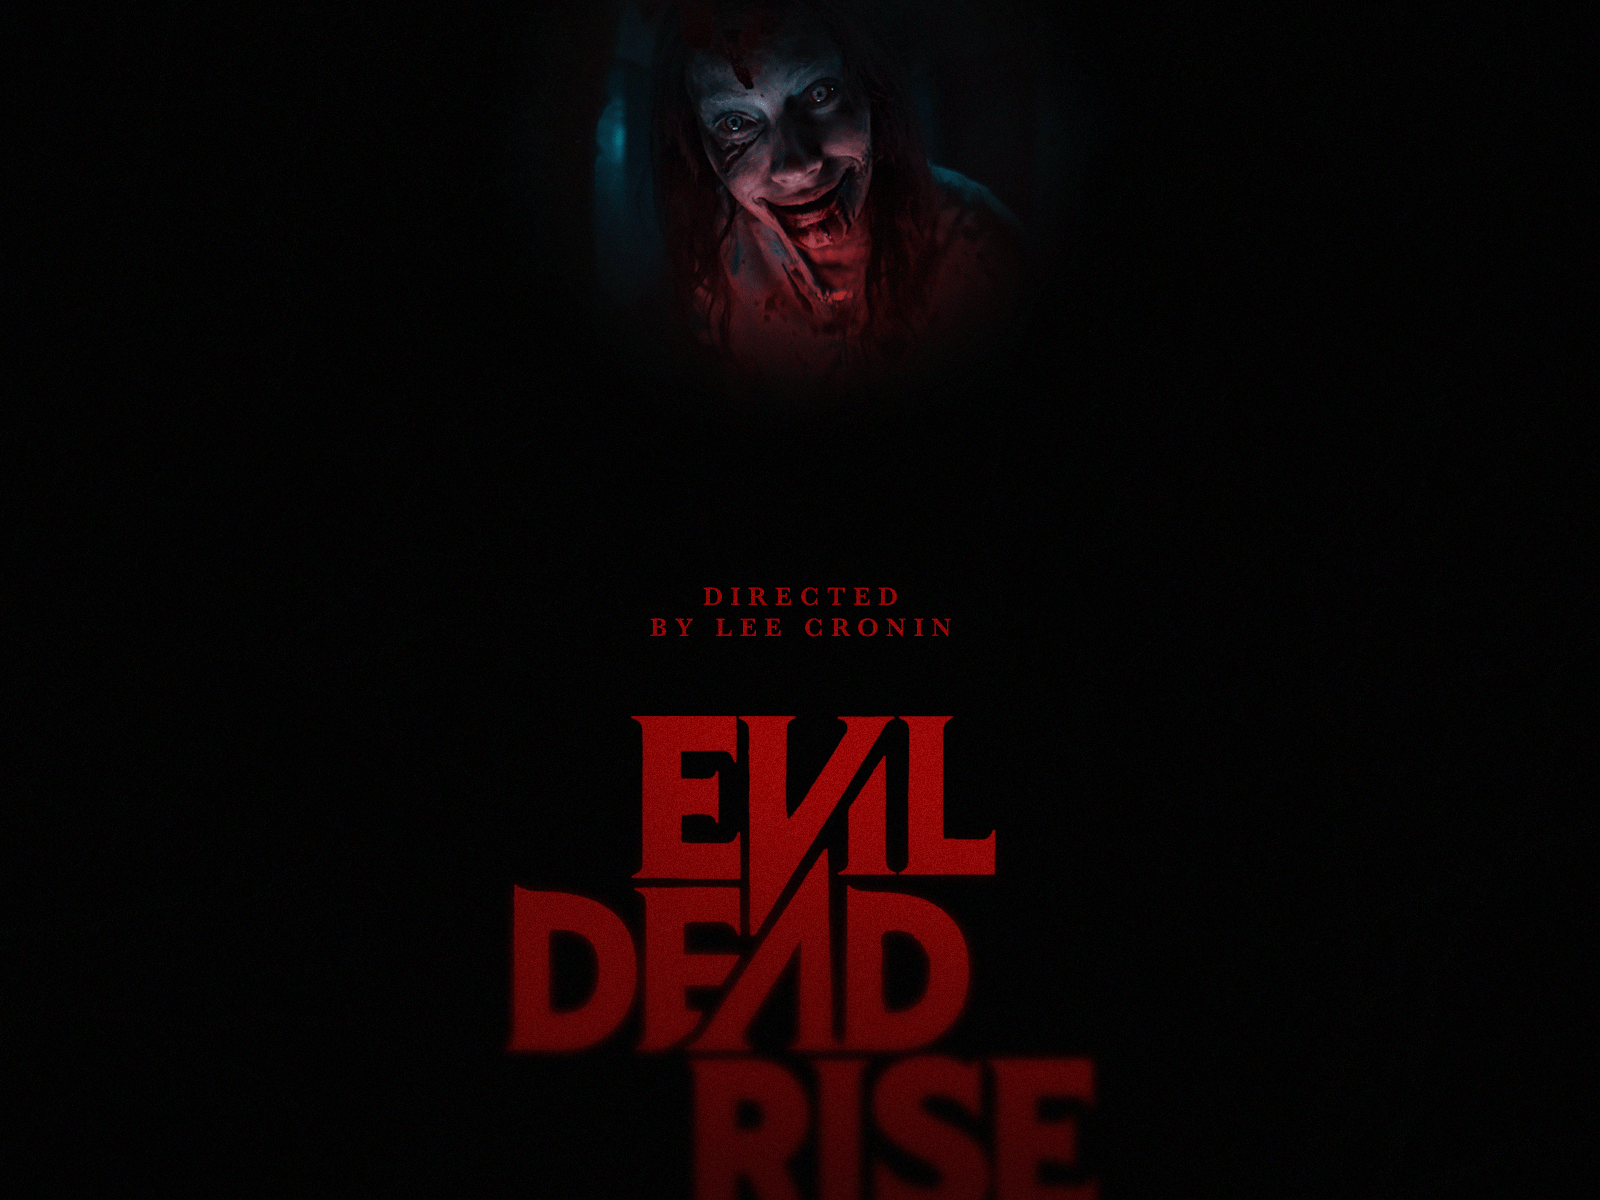 Evil Dead Rise wallpaper